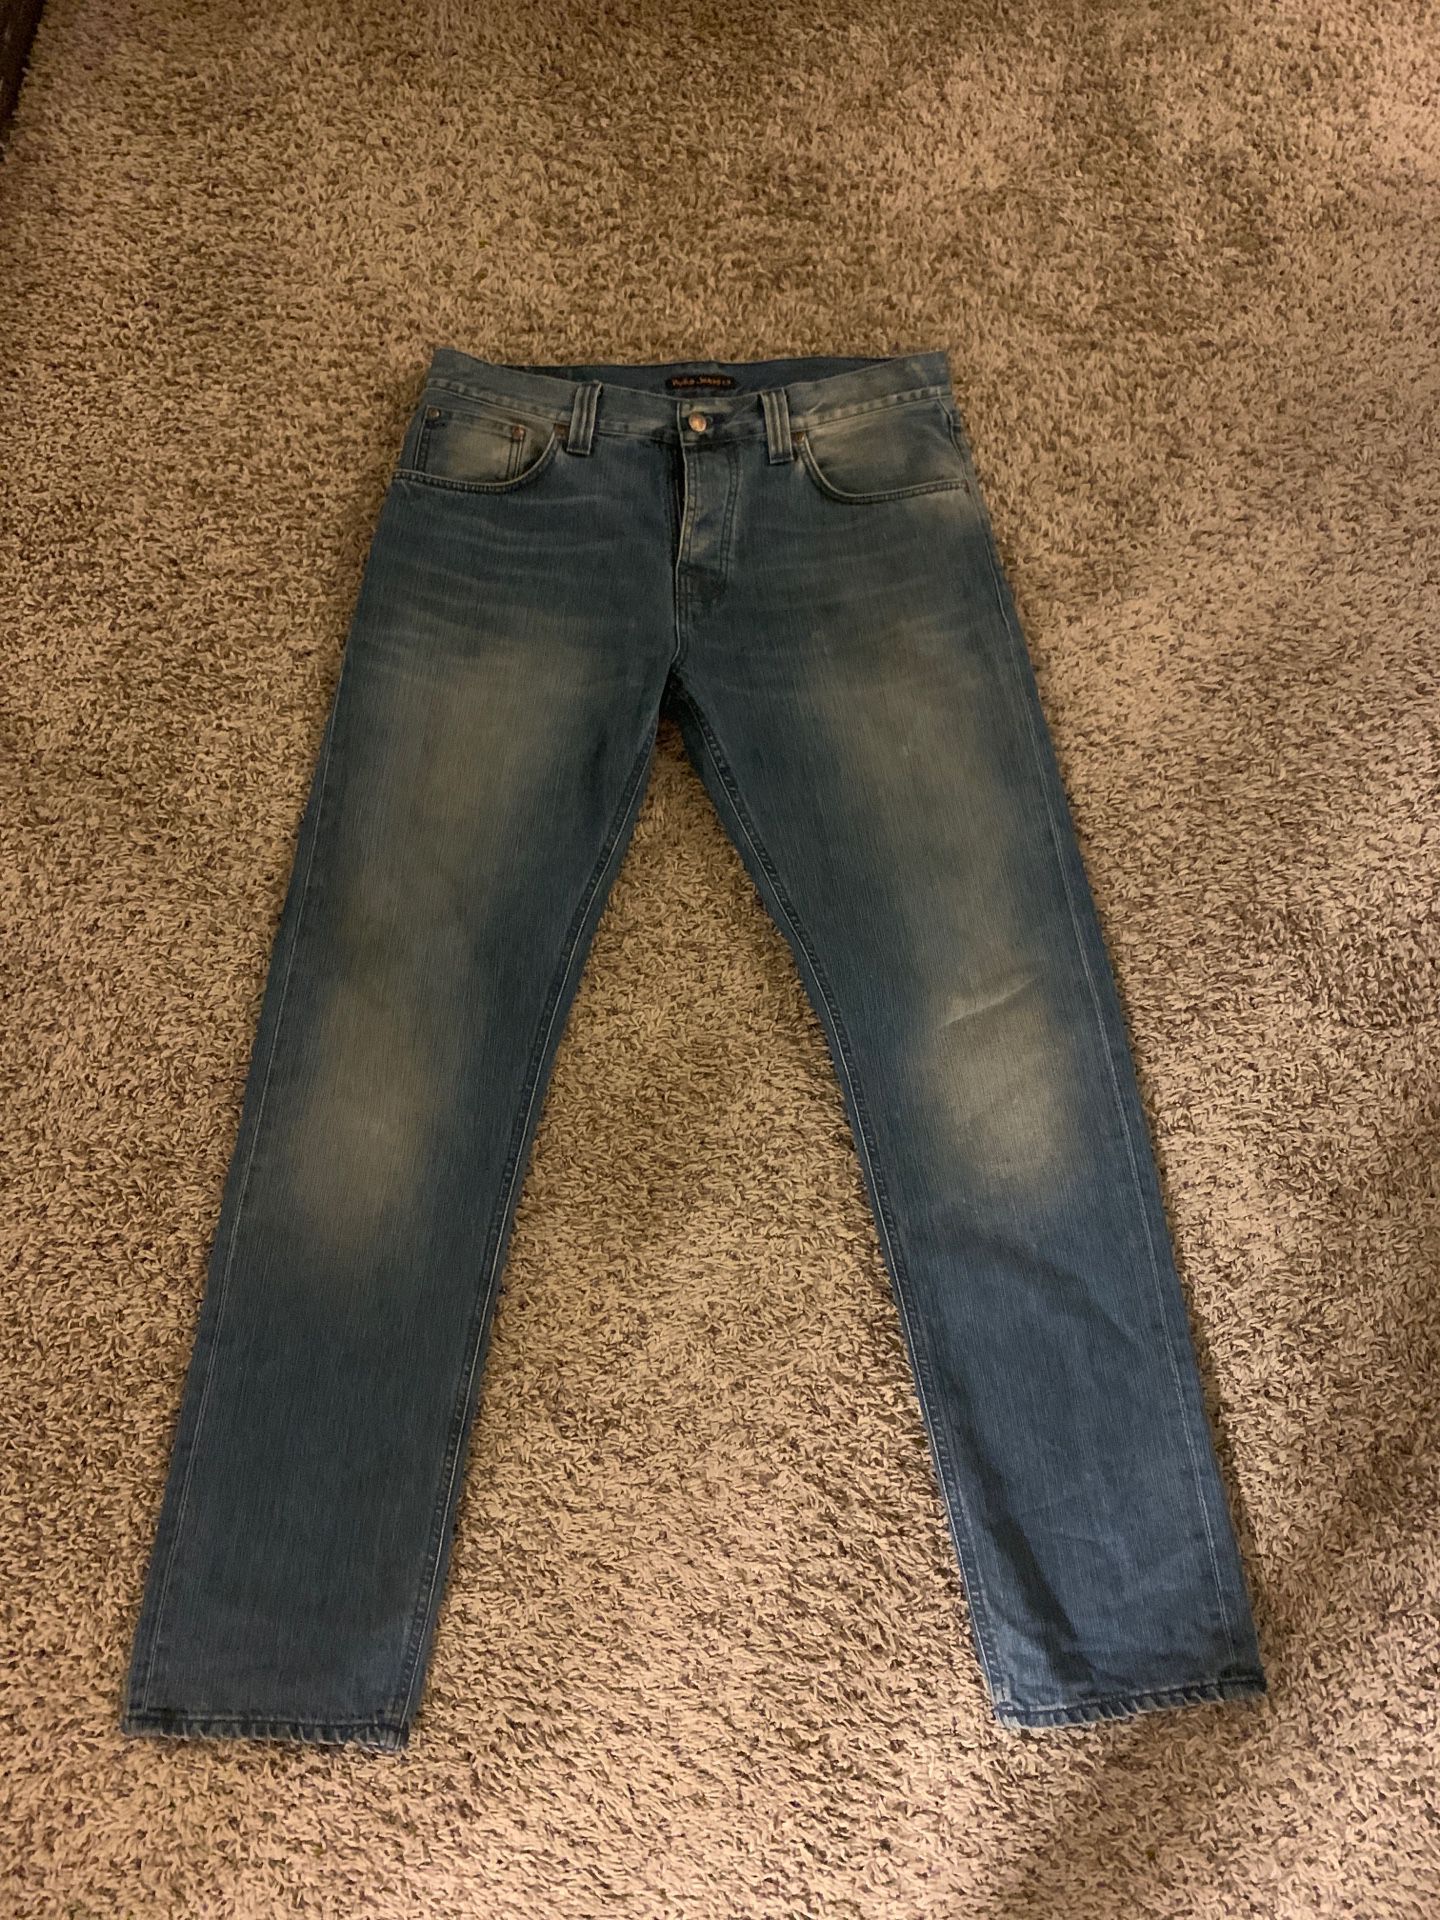 Landskab Rige Advent Nudie jeans co for Sale in Phoenix, AZ - OfferUp